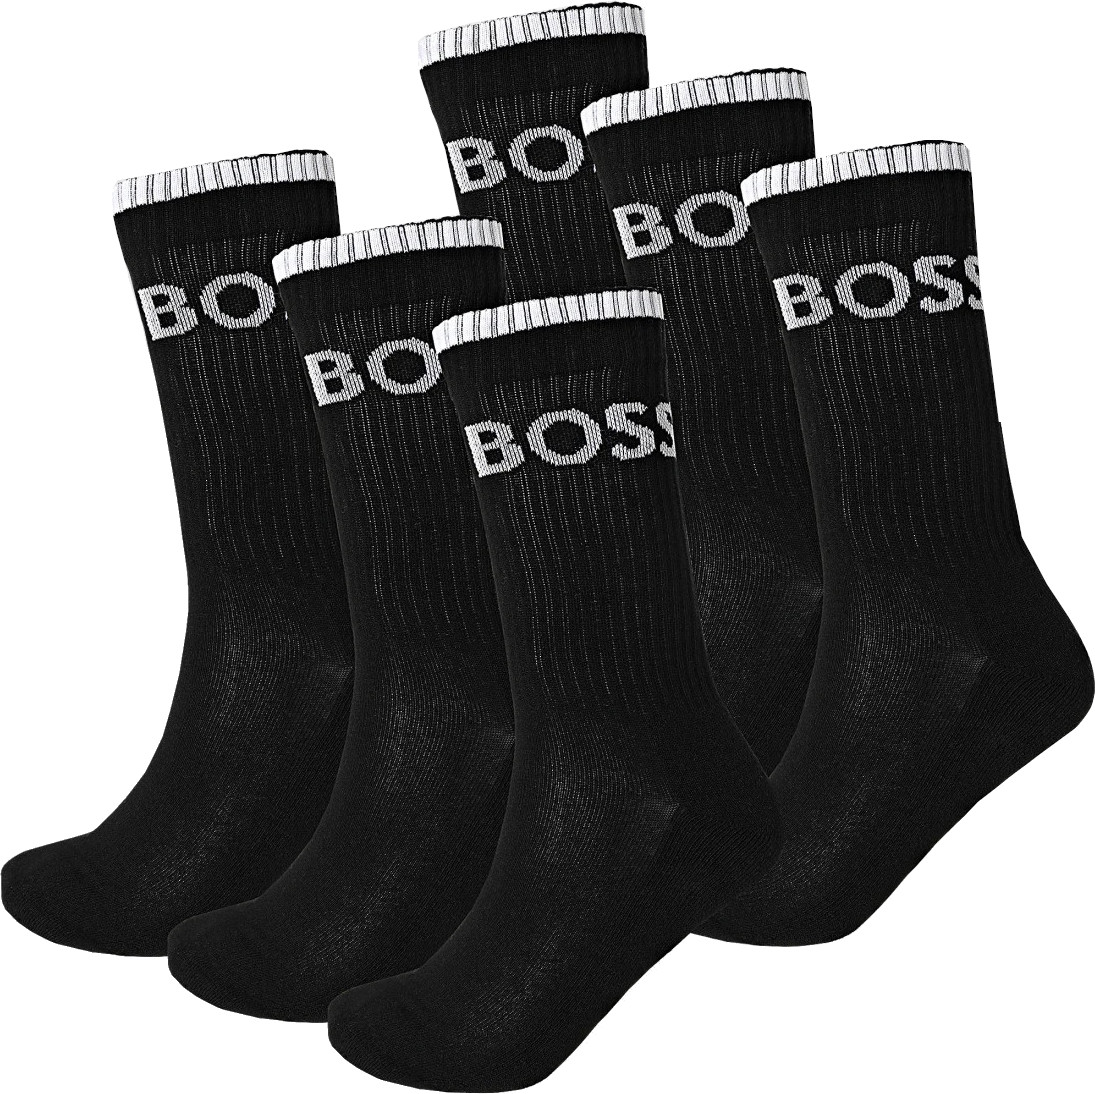 Hugo Boss 6 PACK - pánske ponožky BOSS 50510168-001 43-46